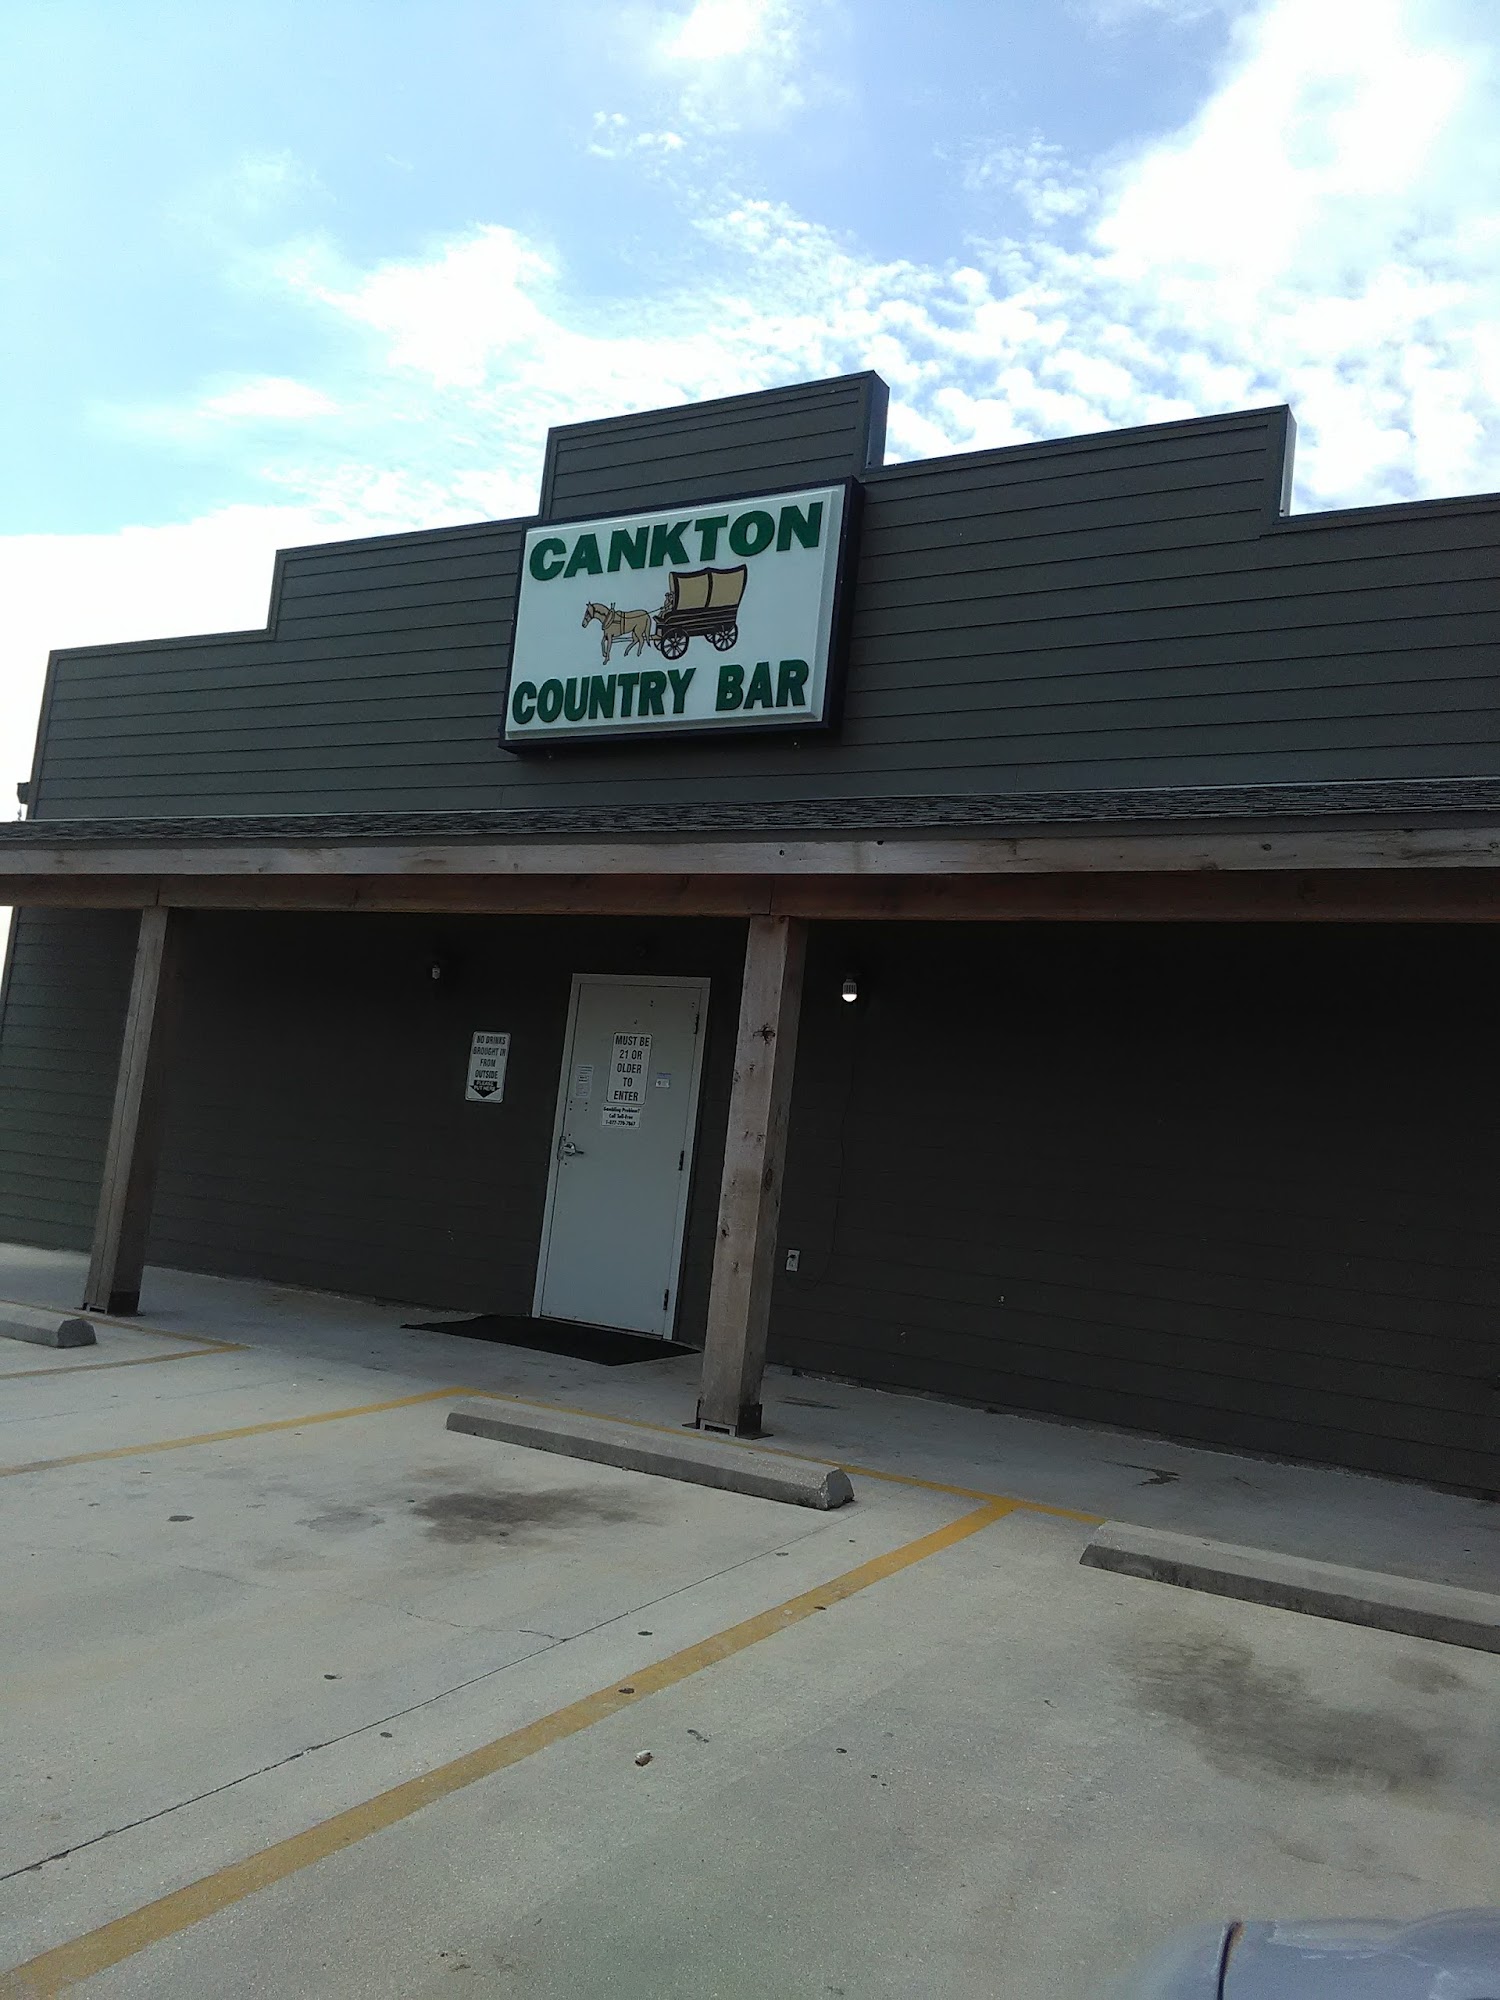 Cankton Country Bar